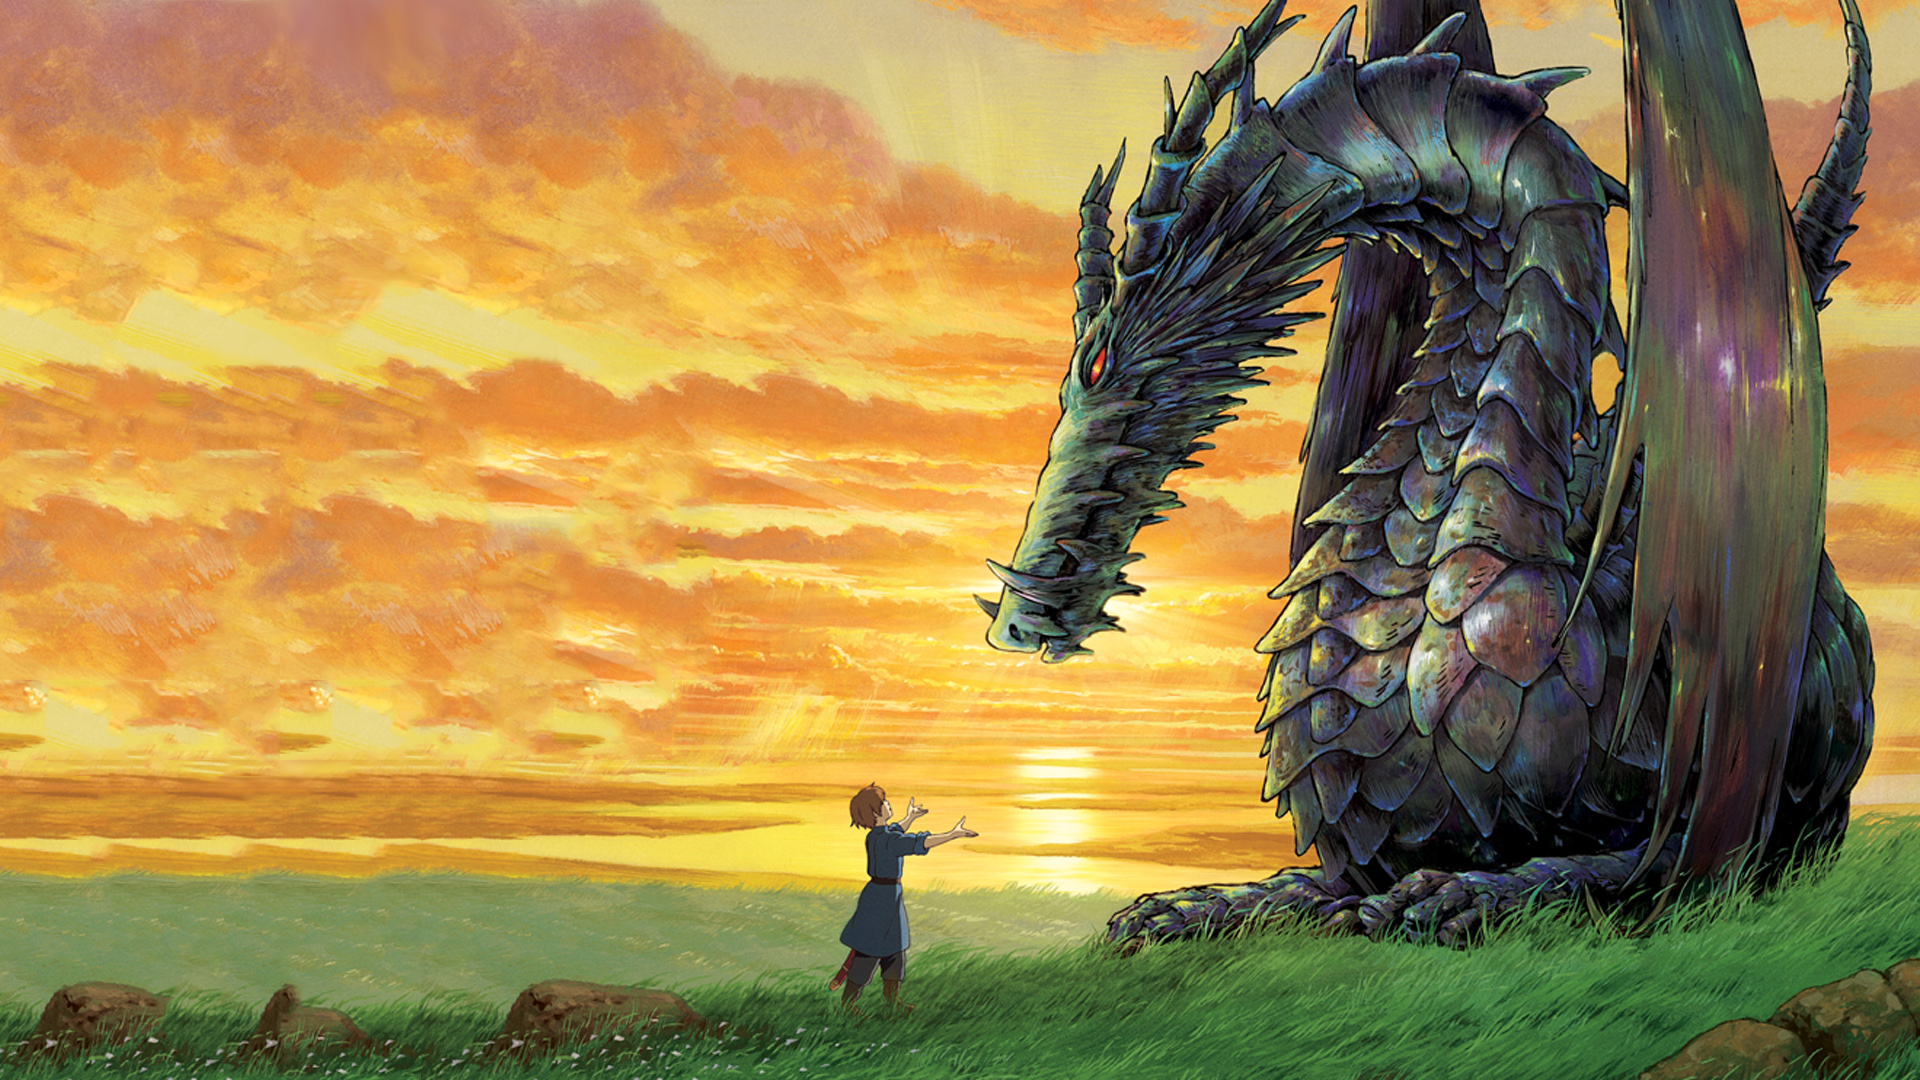 tales from earthsea, anime, dragon